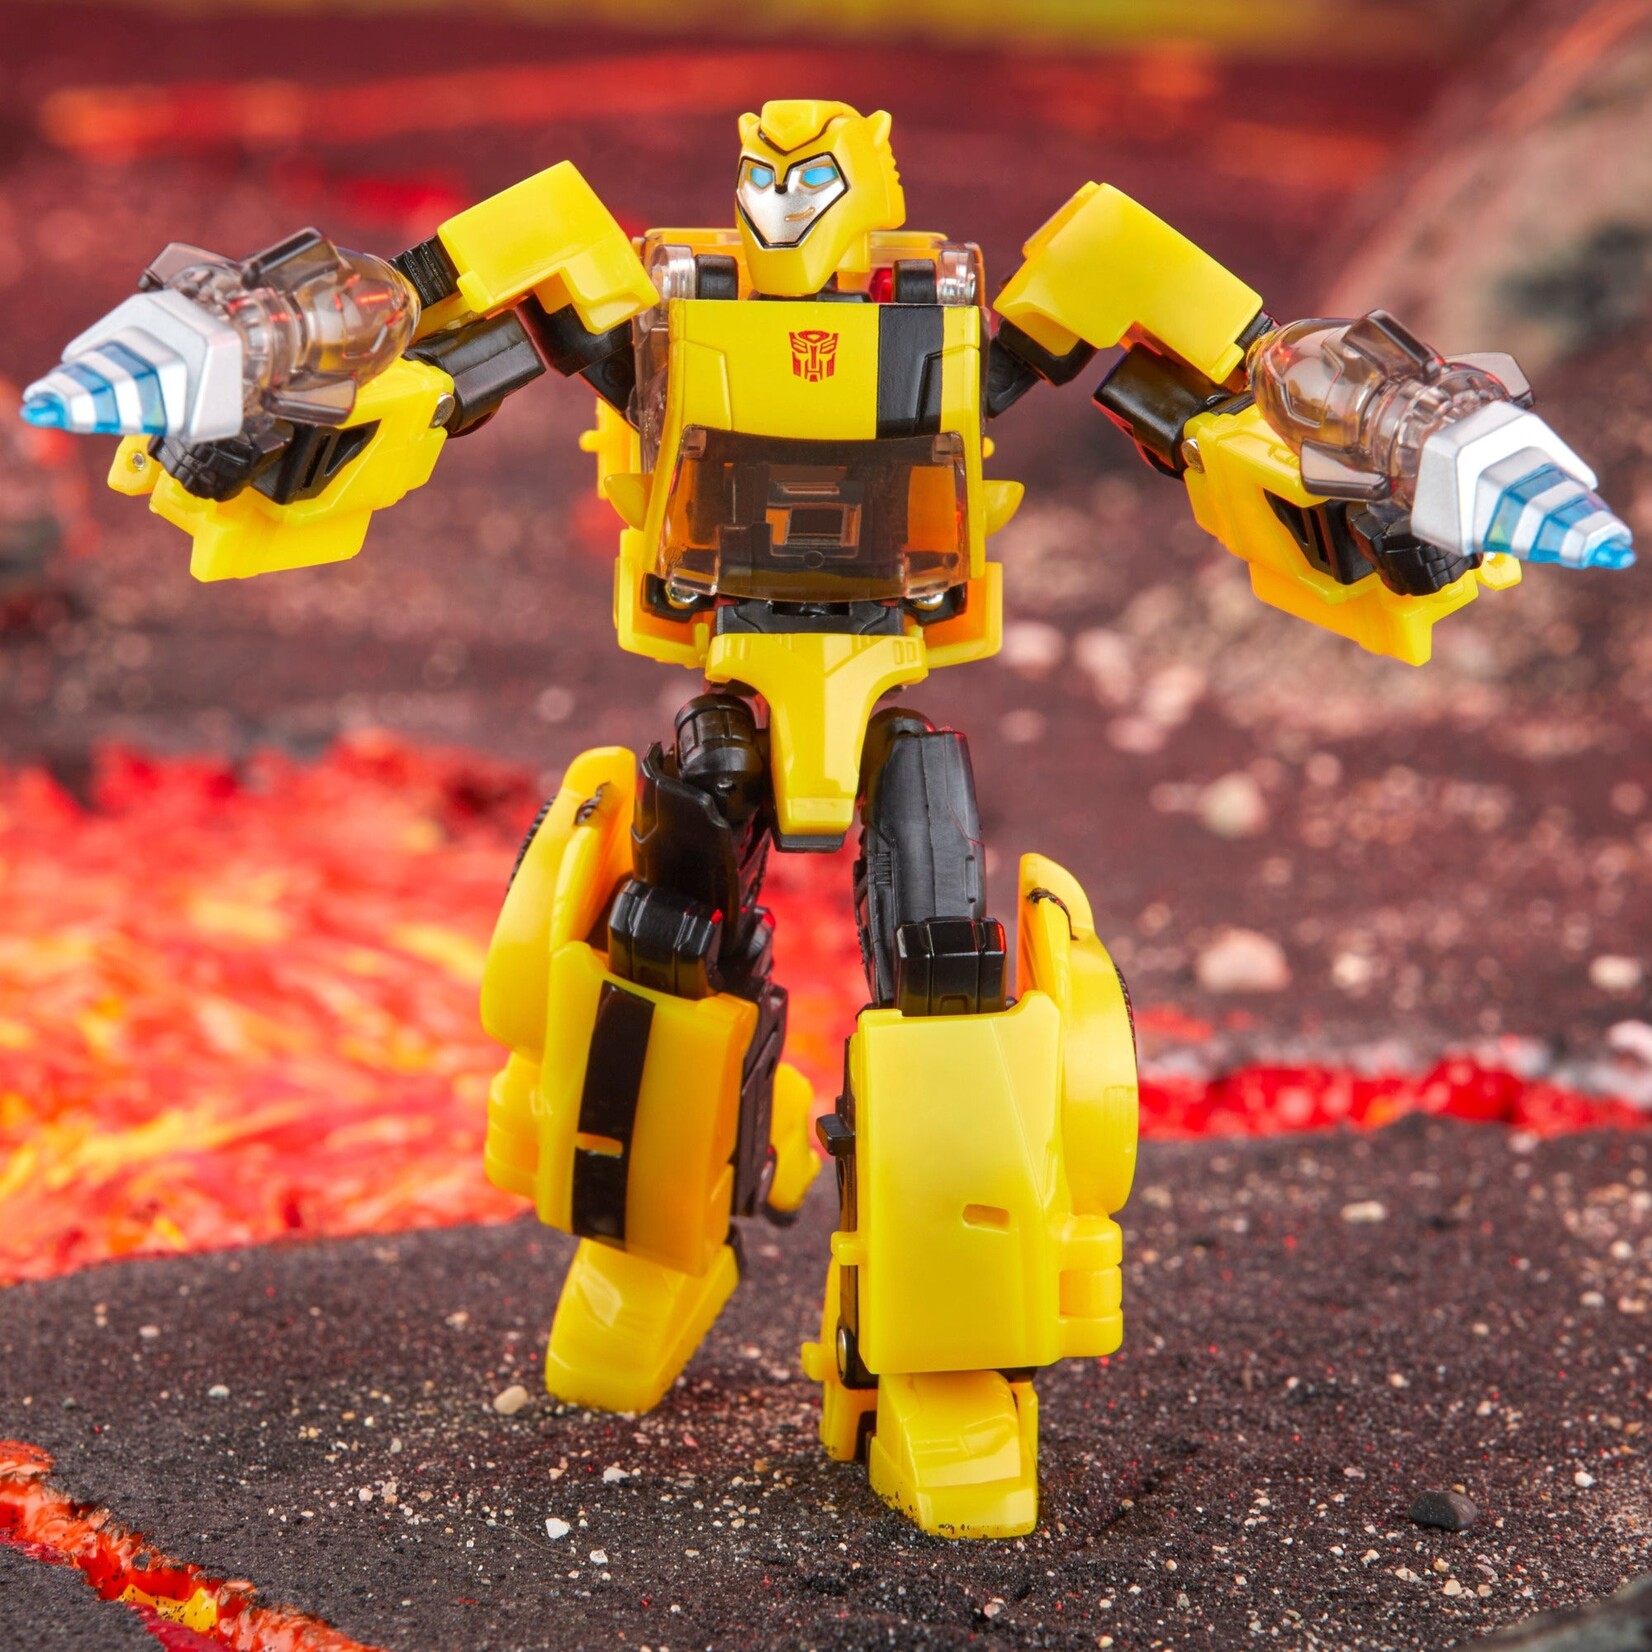 Hasbro Hasbro Transformers Legacy United Deluxe Class Action Figure Animated Universe Bumblebee 14 cm